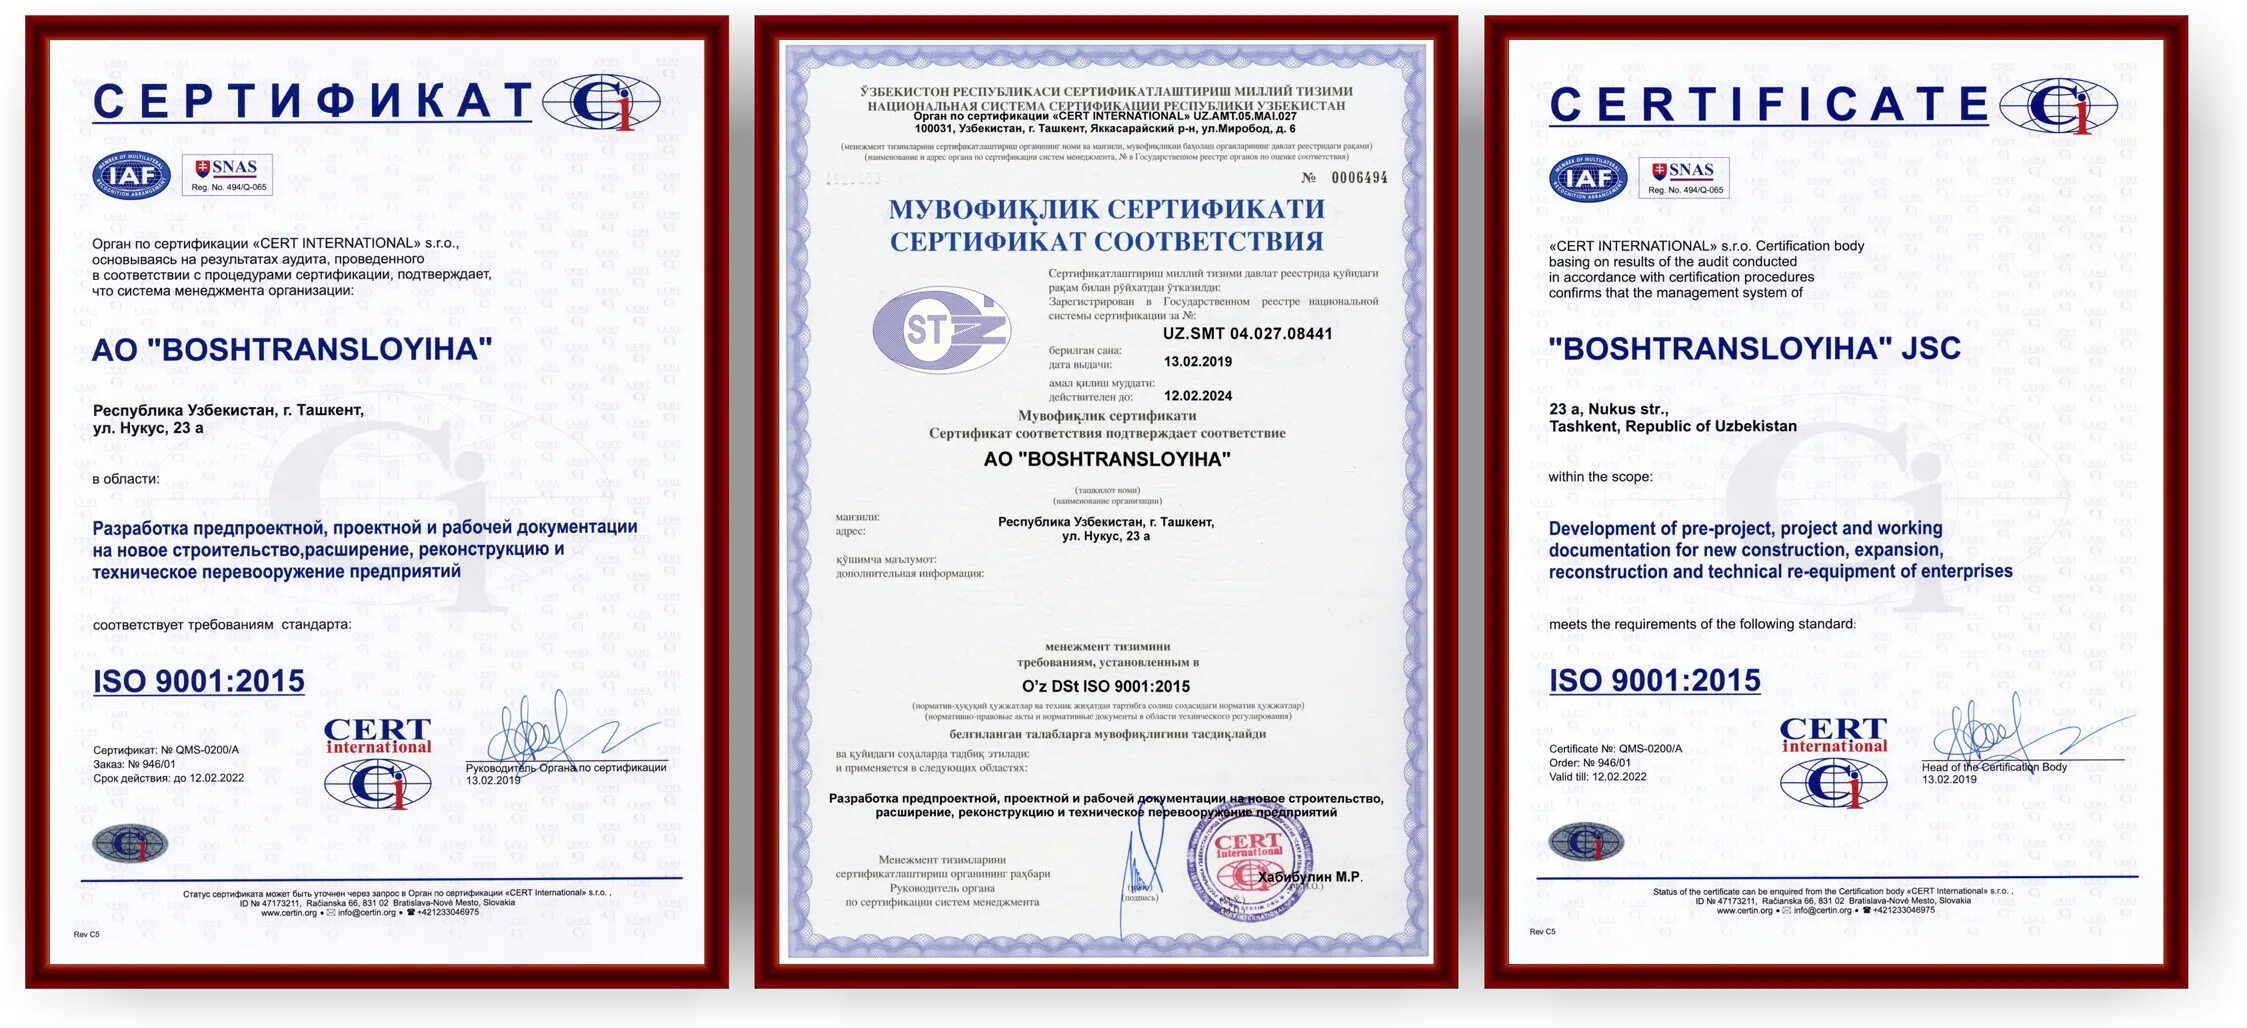 Сертификация в москве. Сертификат ГОСТ Р ИСО 9001. TDM Electric ISO 9001. Сертификат СМК ИСО 9001. Сертификат качества ISO 9001 2000.